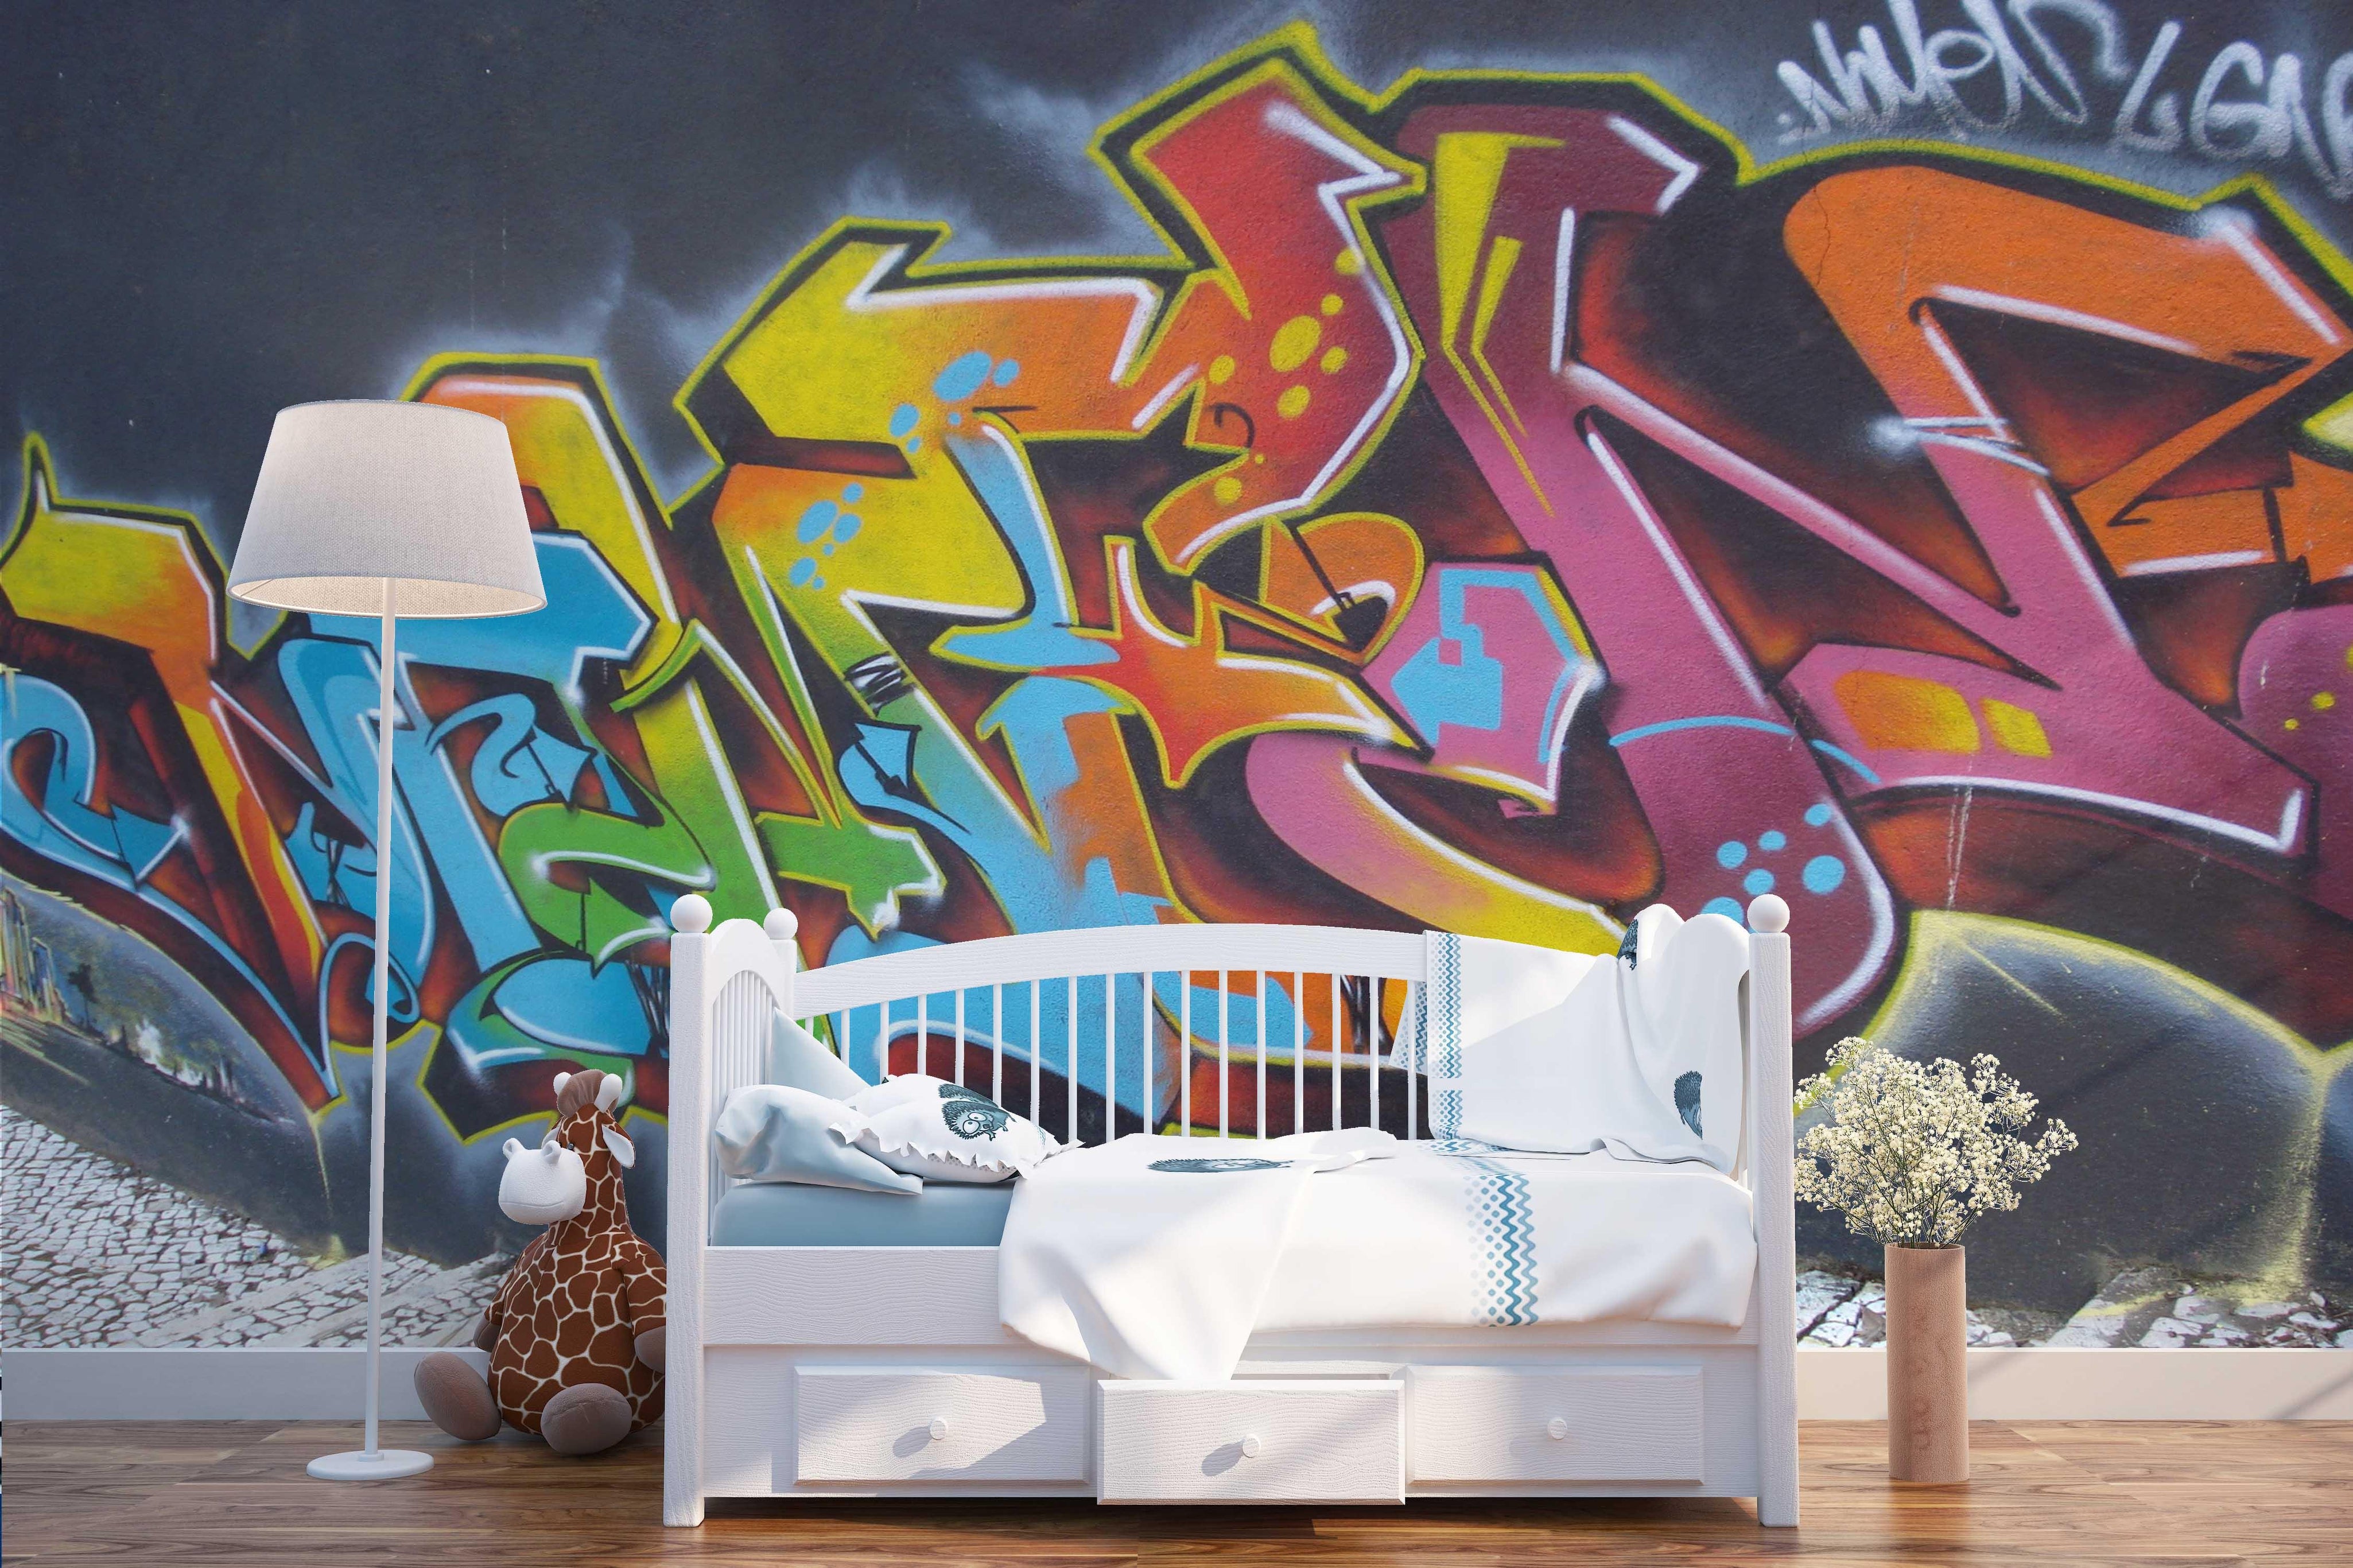 3D Abstract Colorful Slogan Graffiti Wall Mural Wallpaper 130- Jess Art Decoration